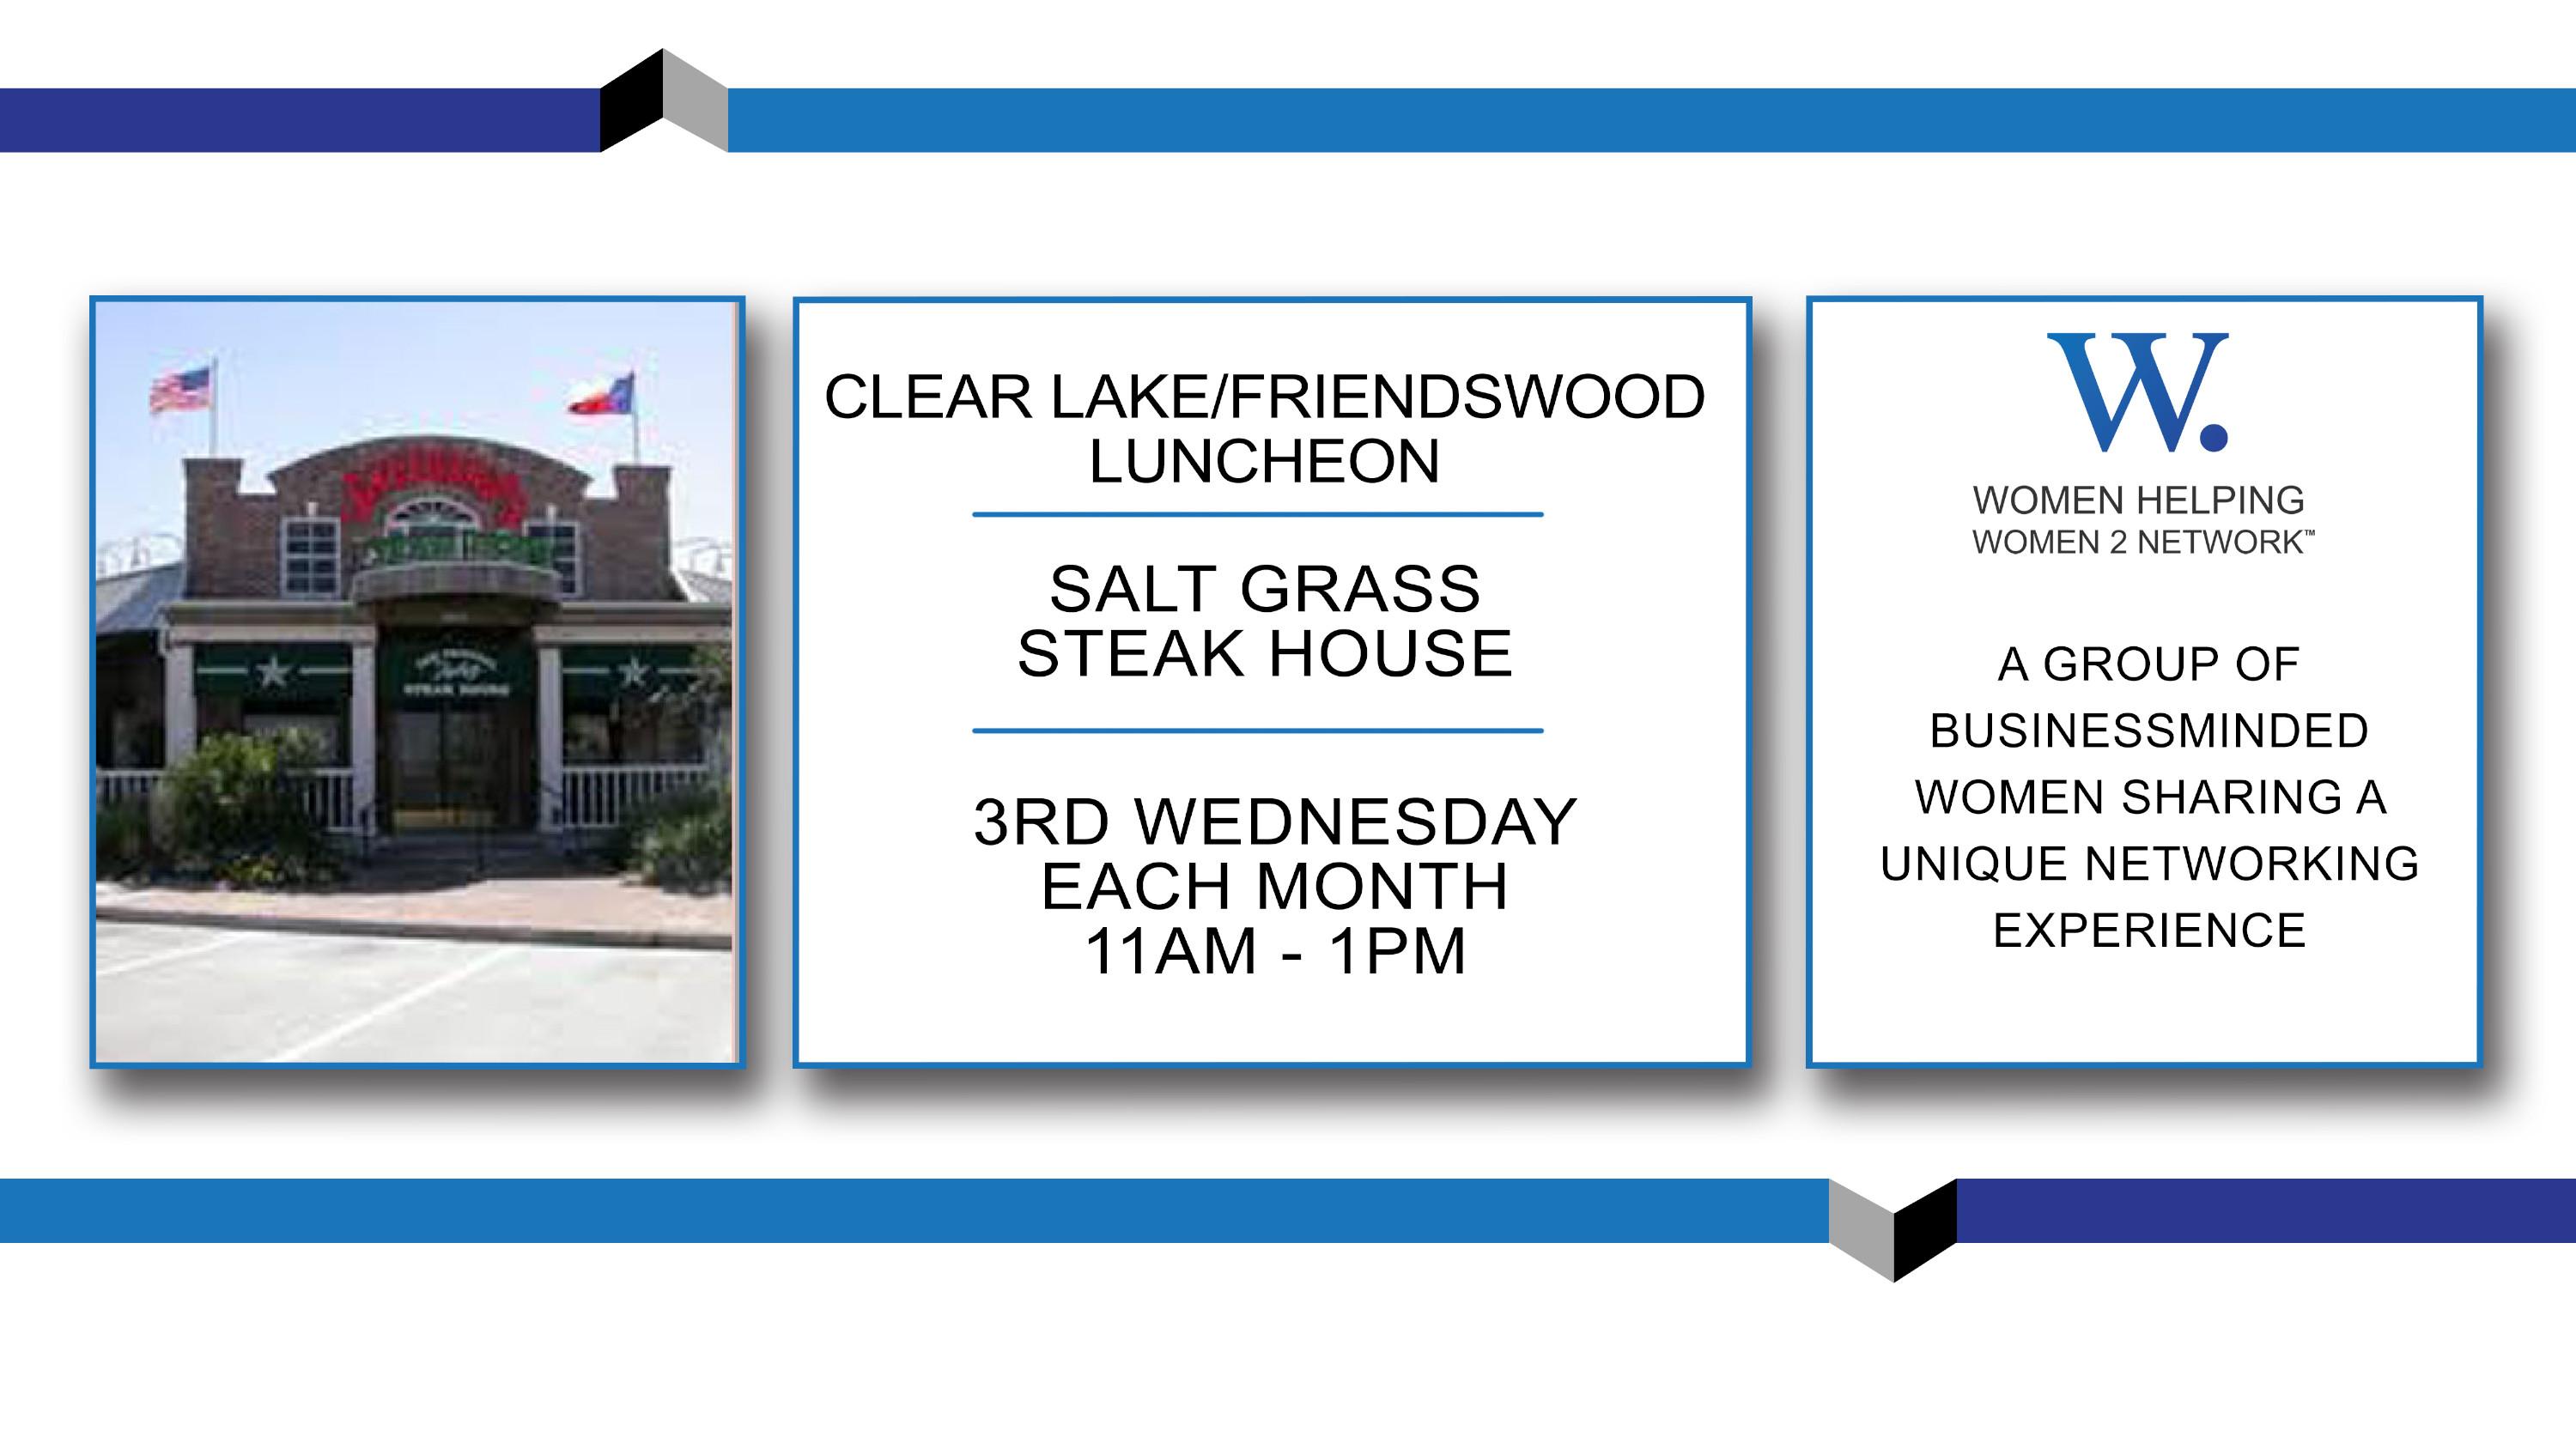 WHW2N - Clear Lake / Friendswood Luncheon